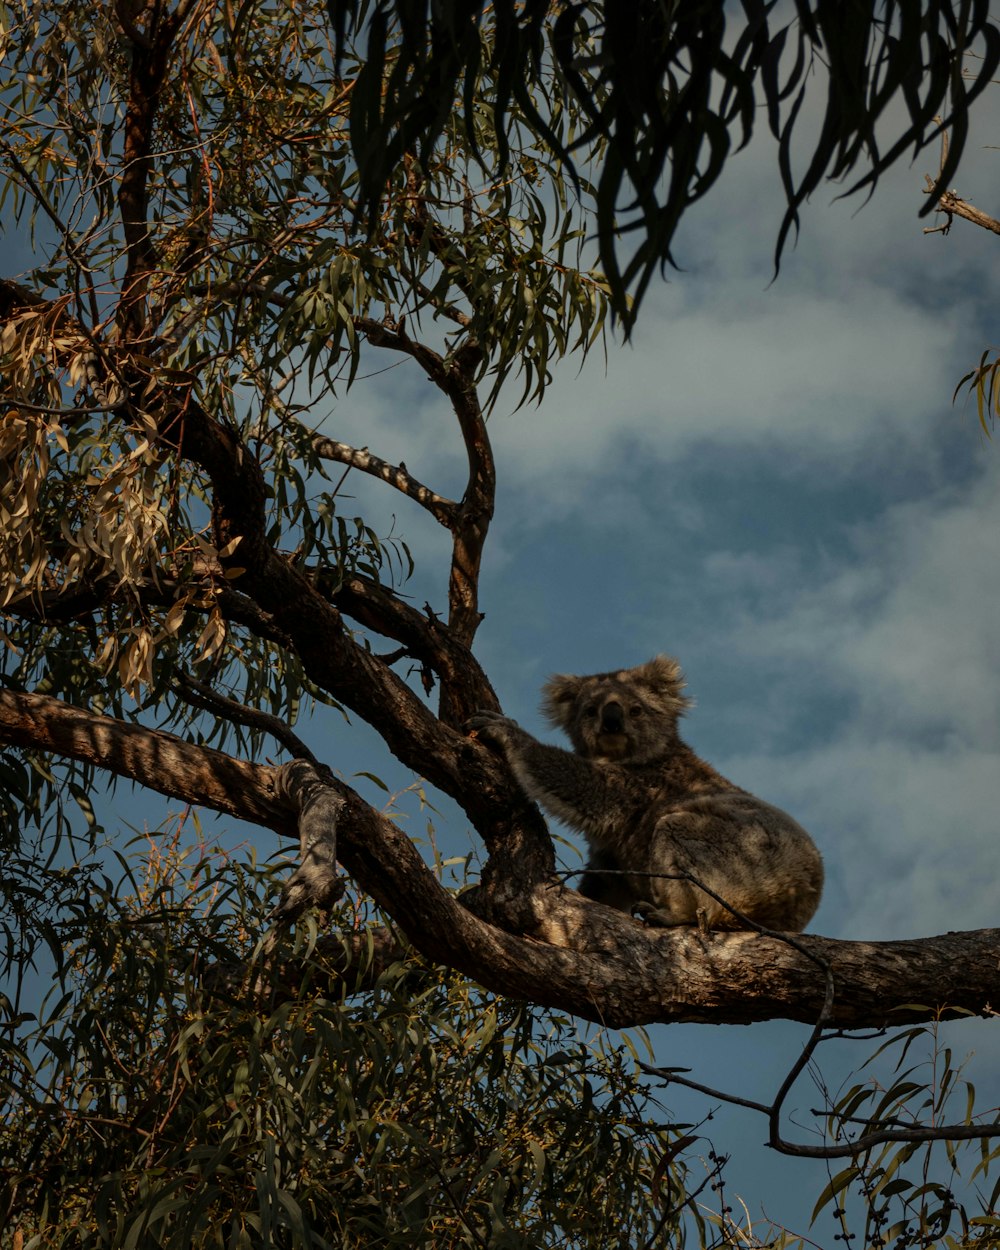 gray koala on tree branch under cloudy sky